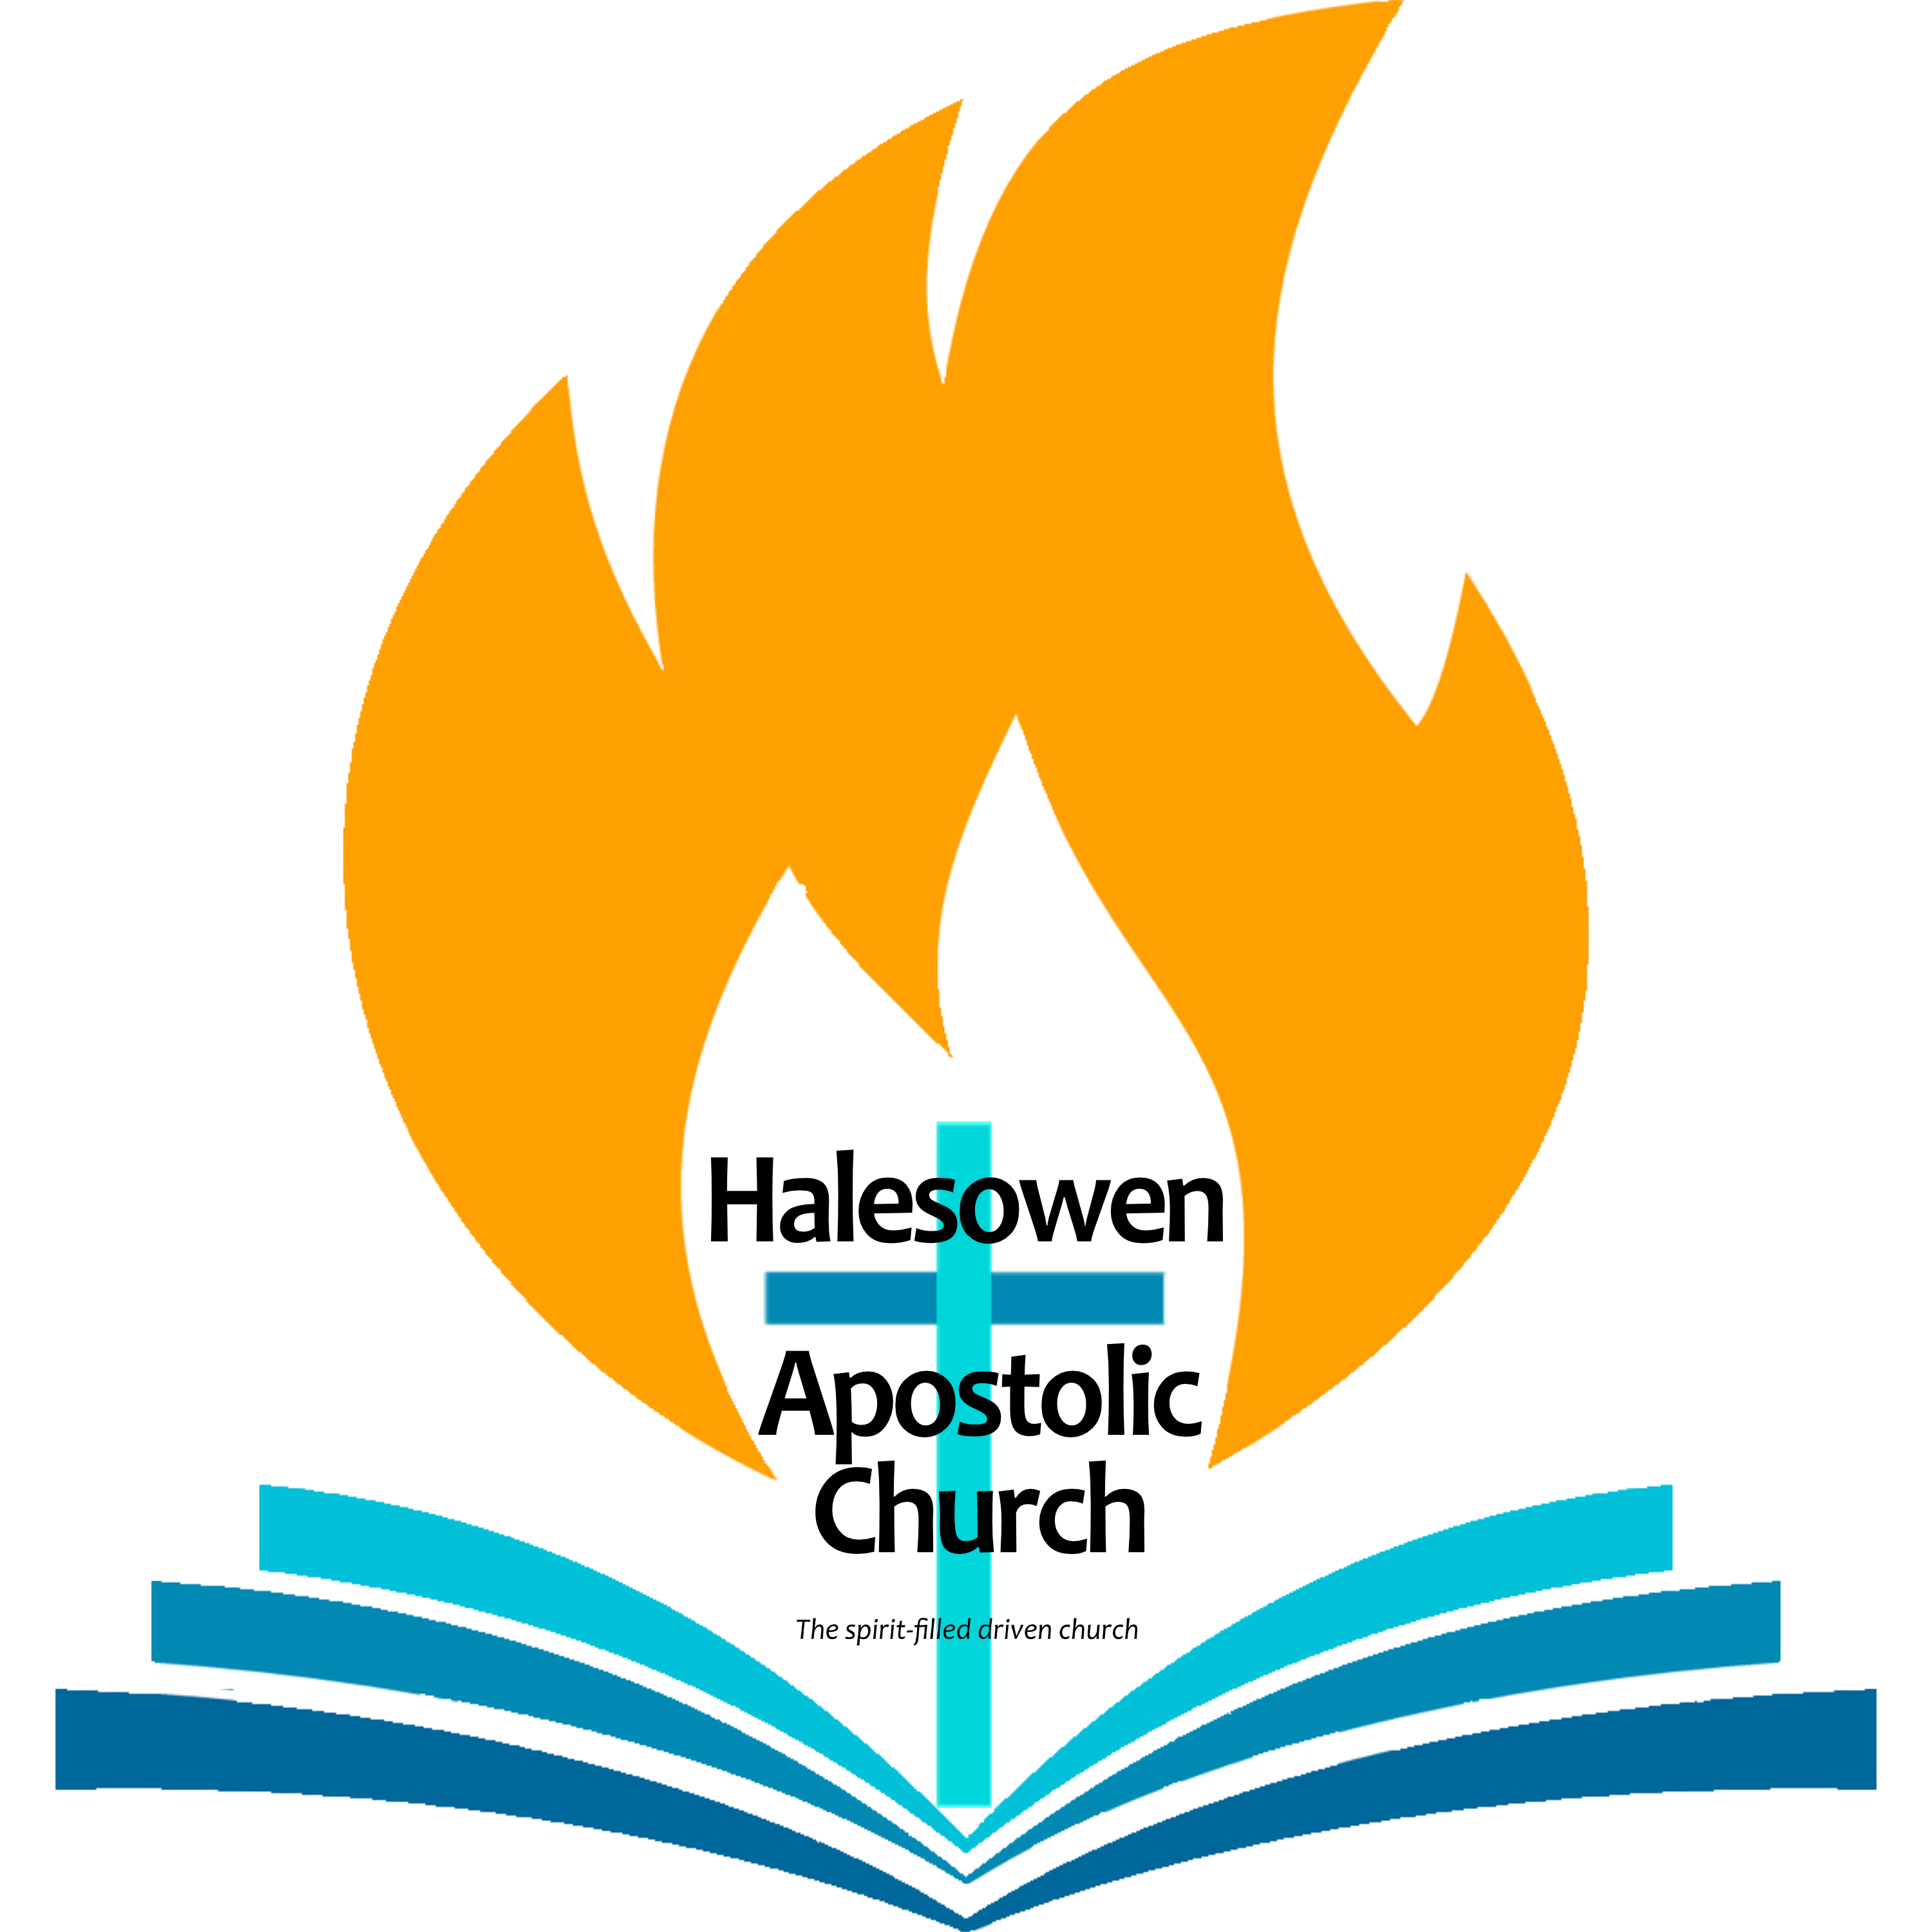 Halesowen Apostolic Church